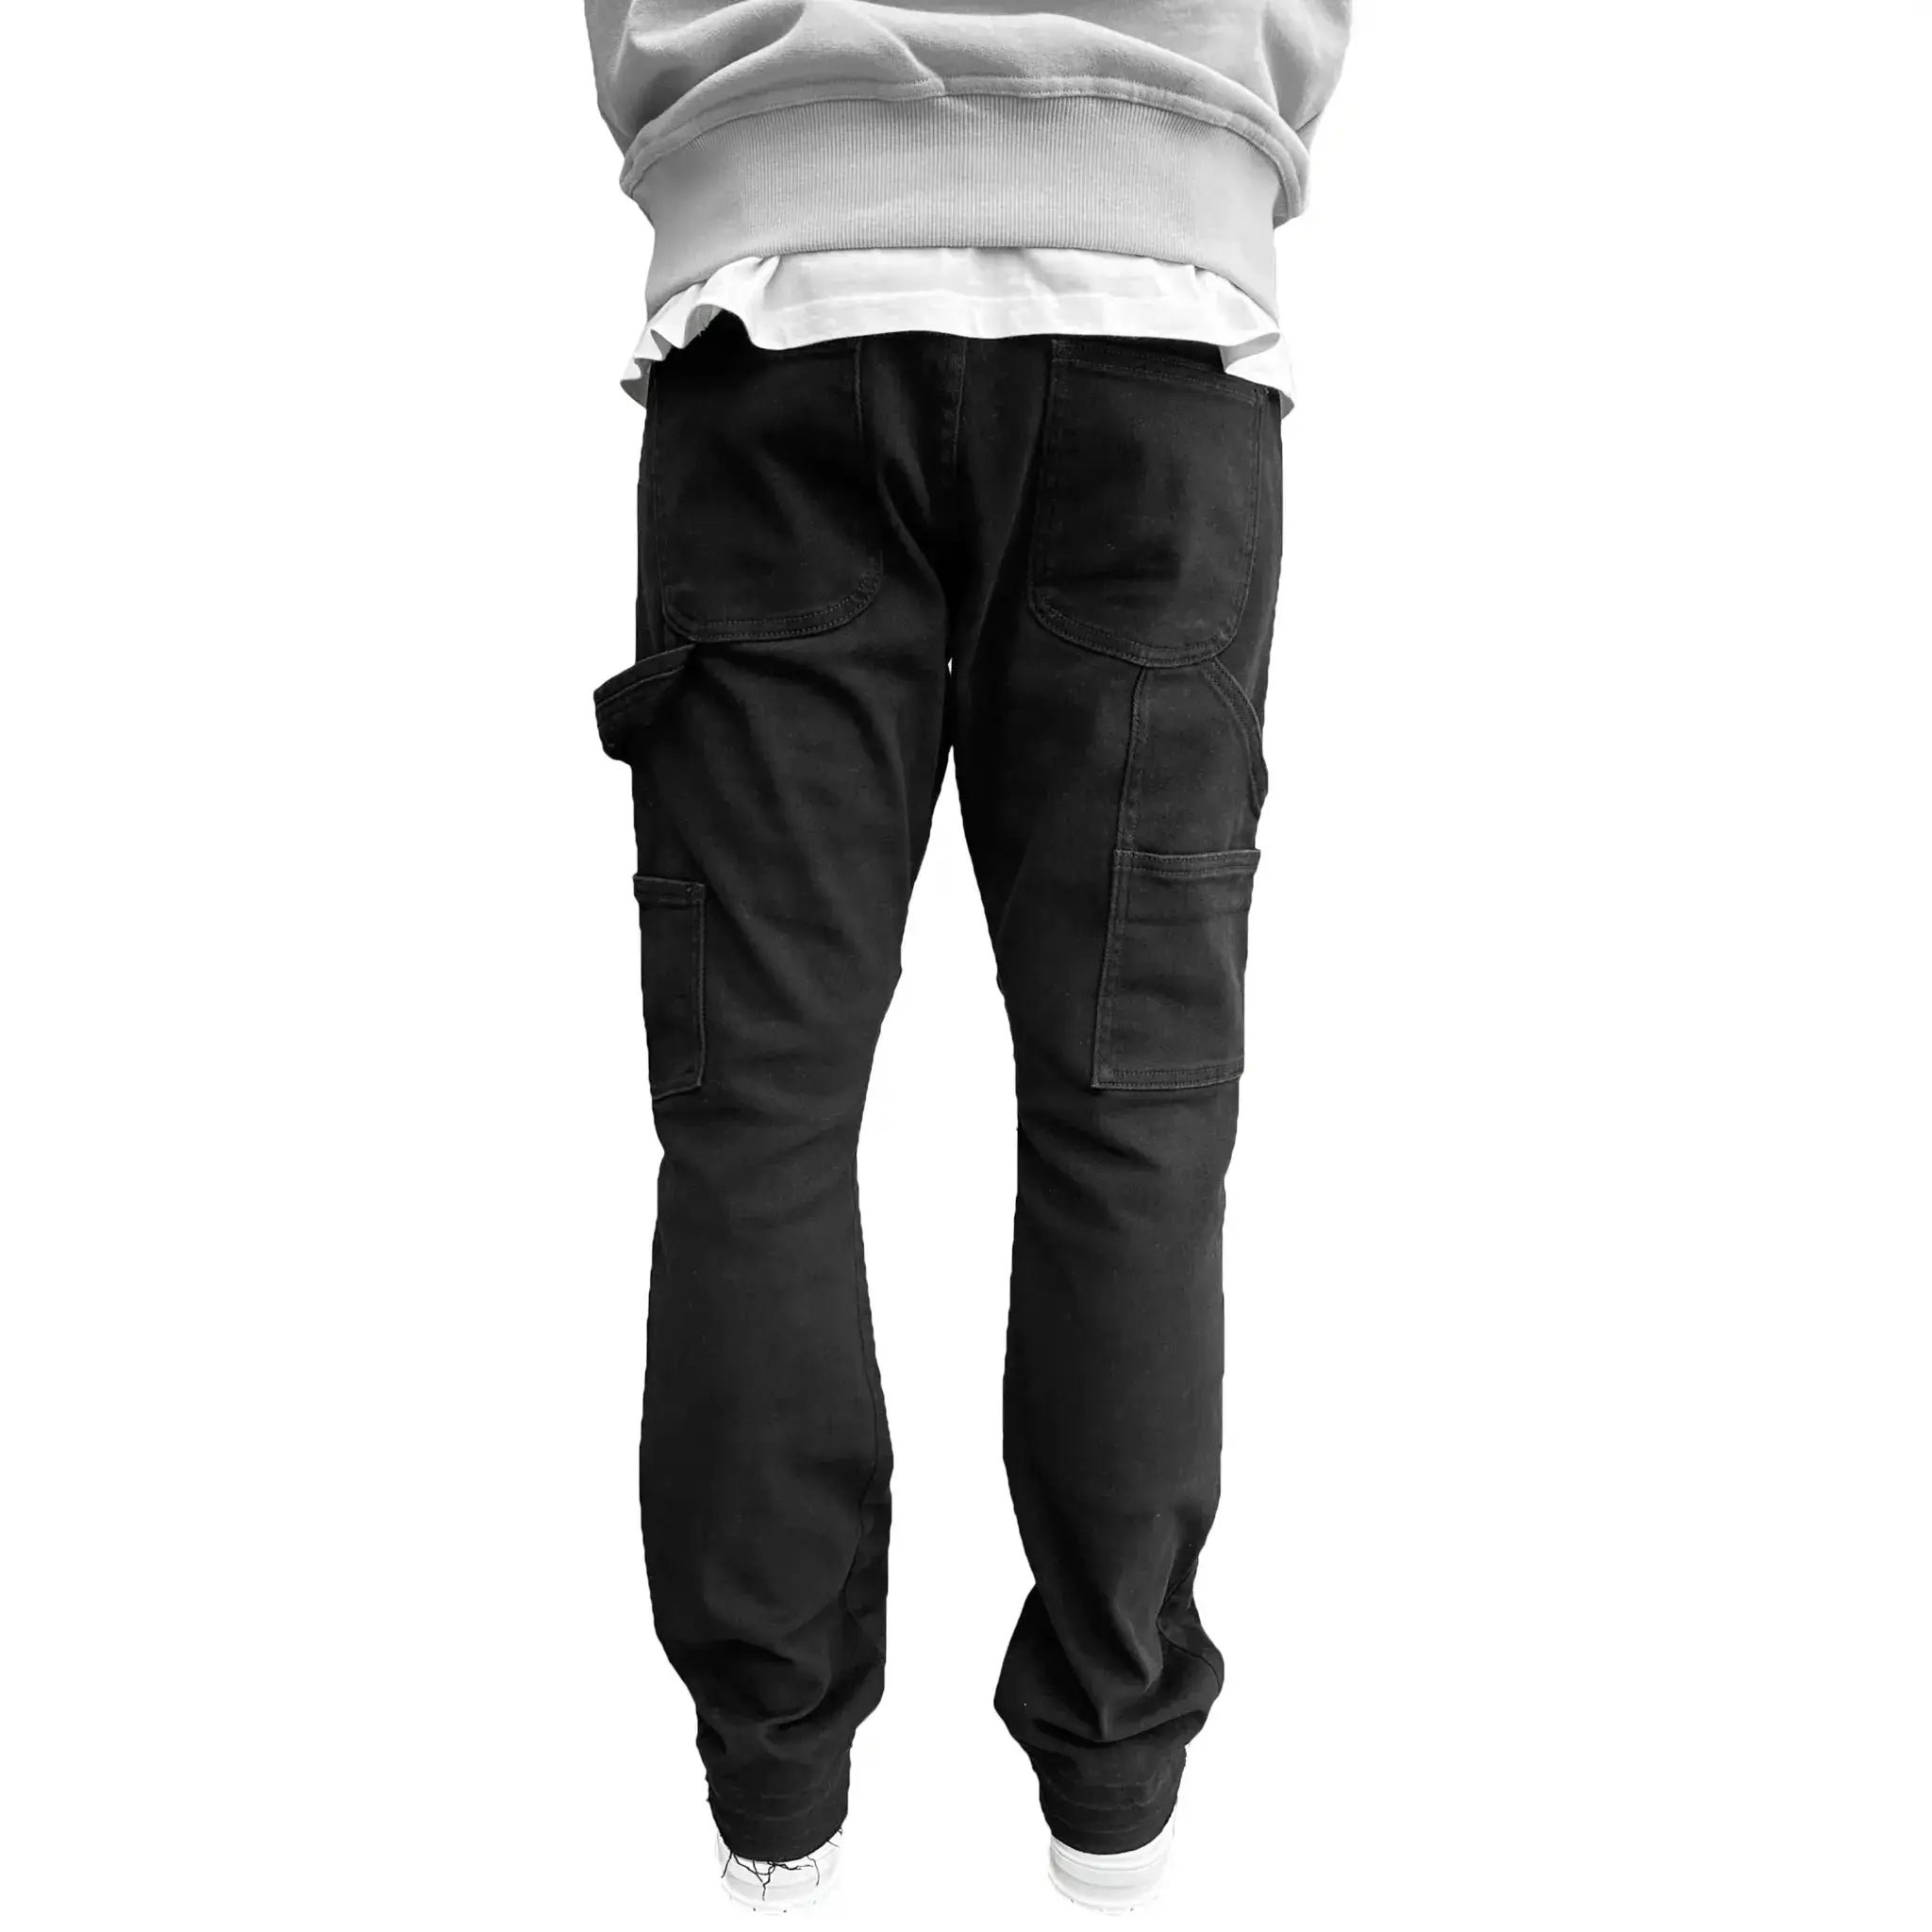 Model back view of SBLUP01293 006000 Chino pants